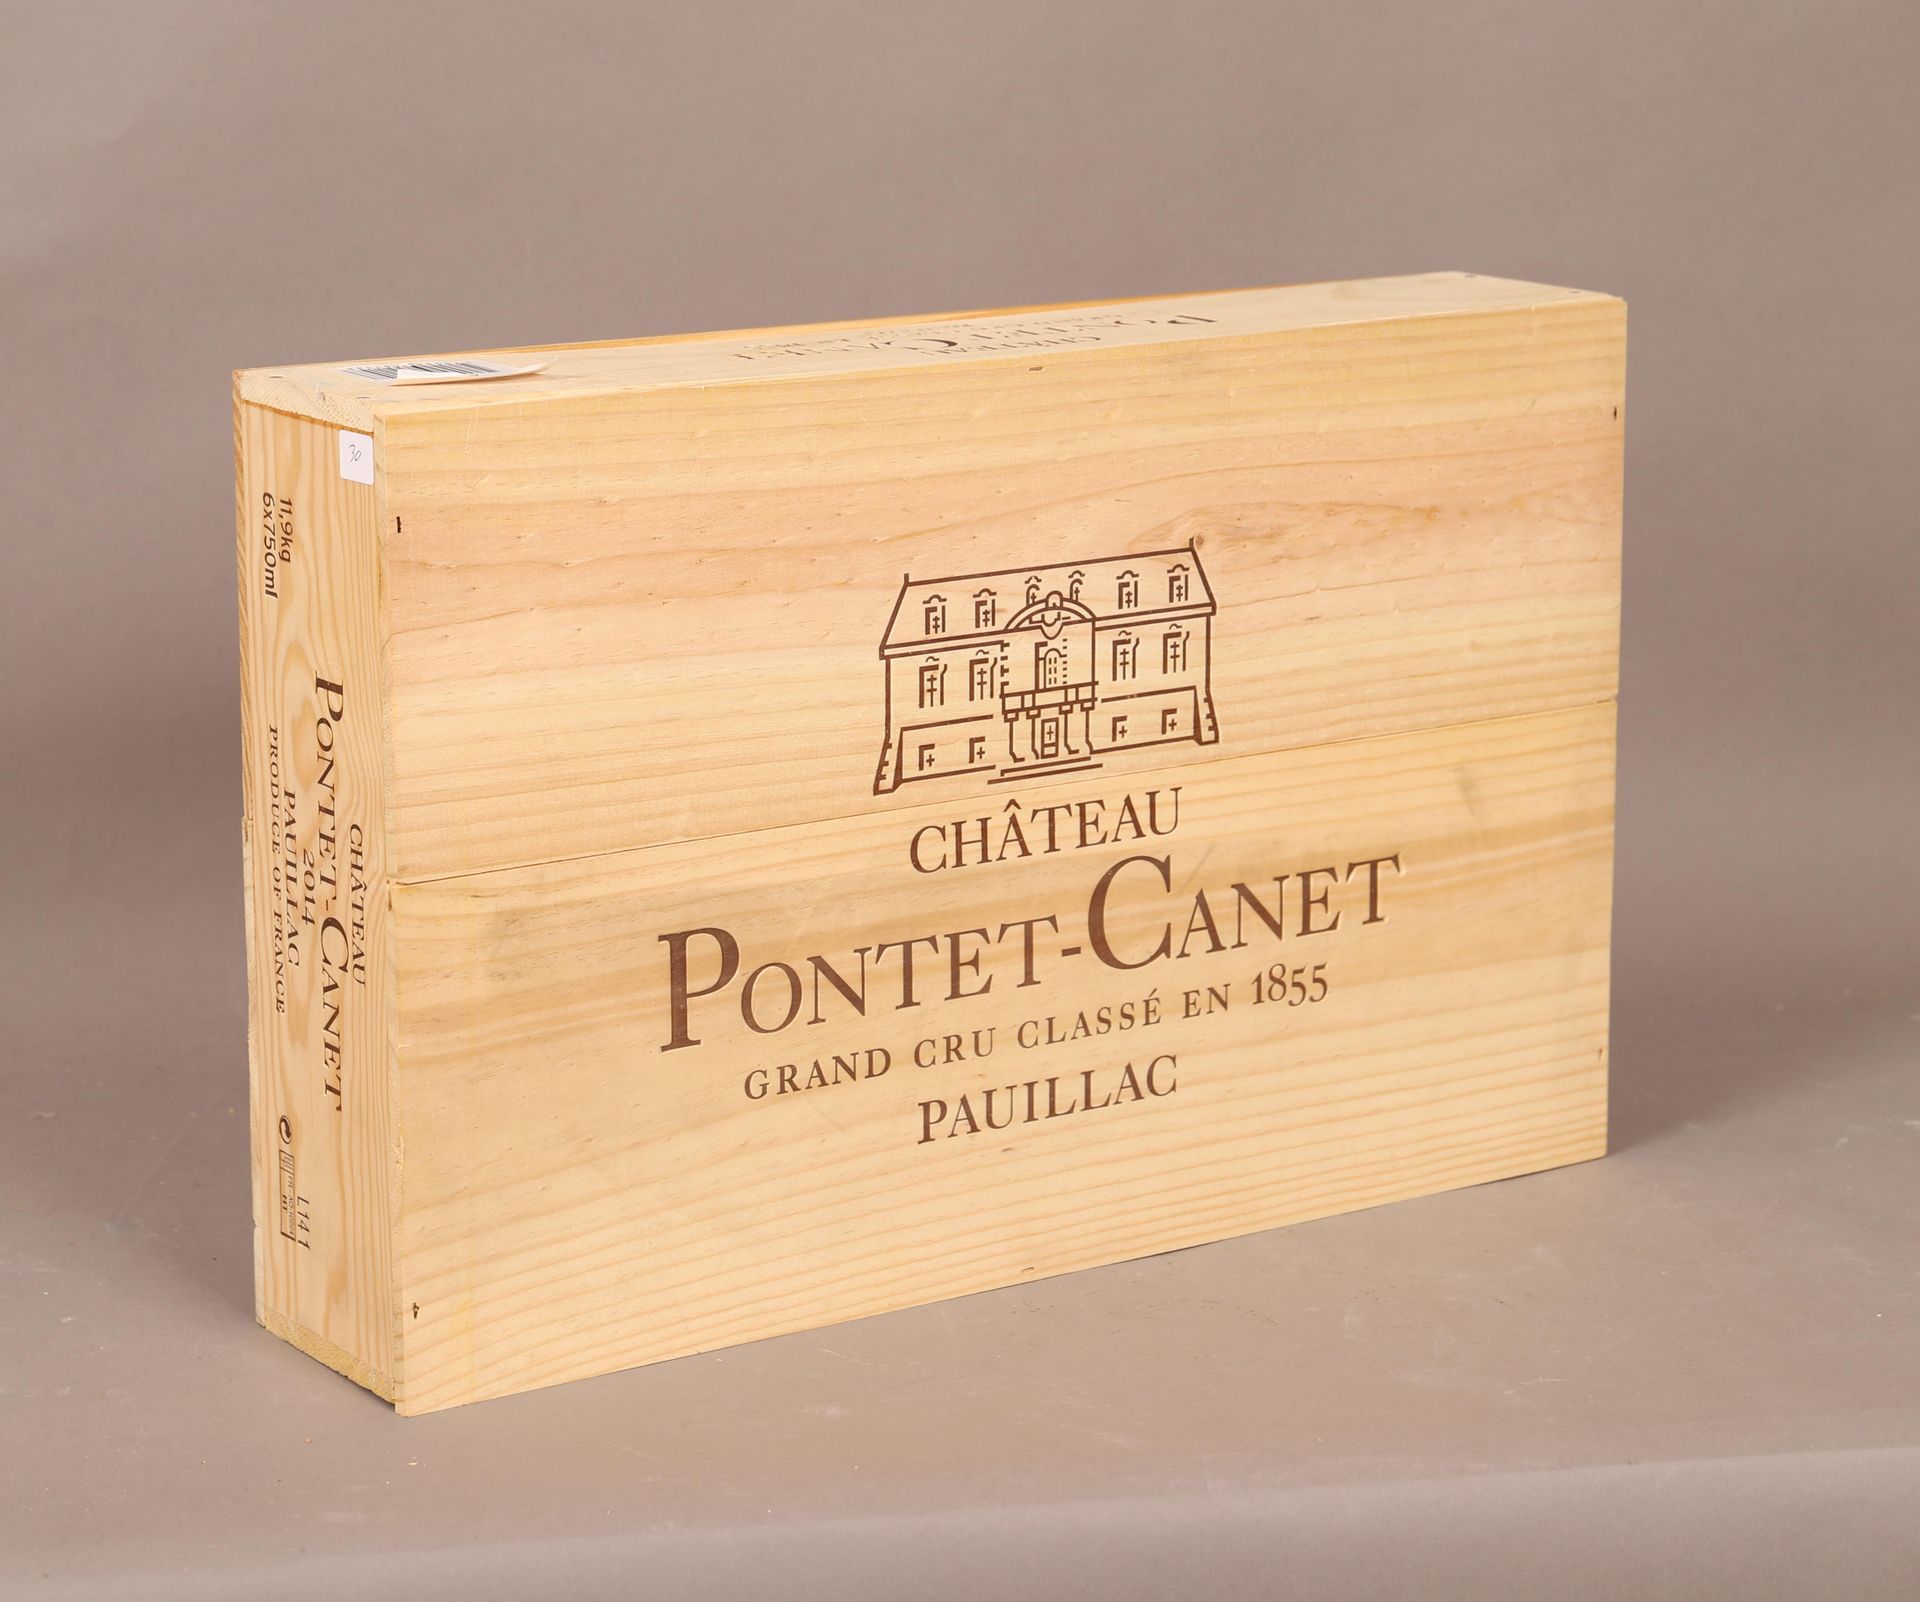 Null Château Pontet-Canet (x6)

GCC

Pauillac

2014

CBF

0,75L